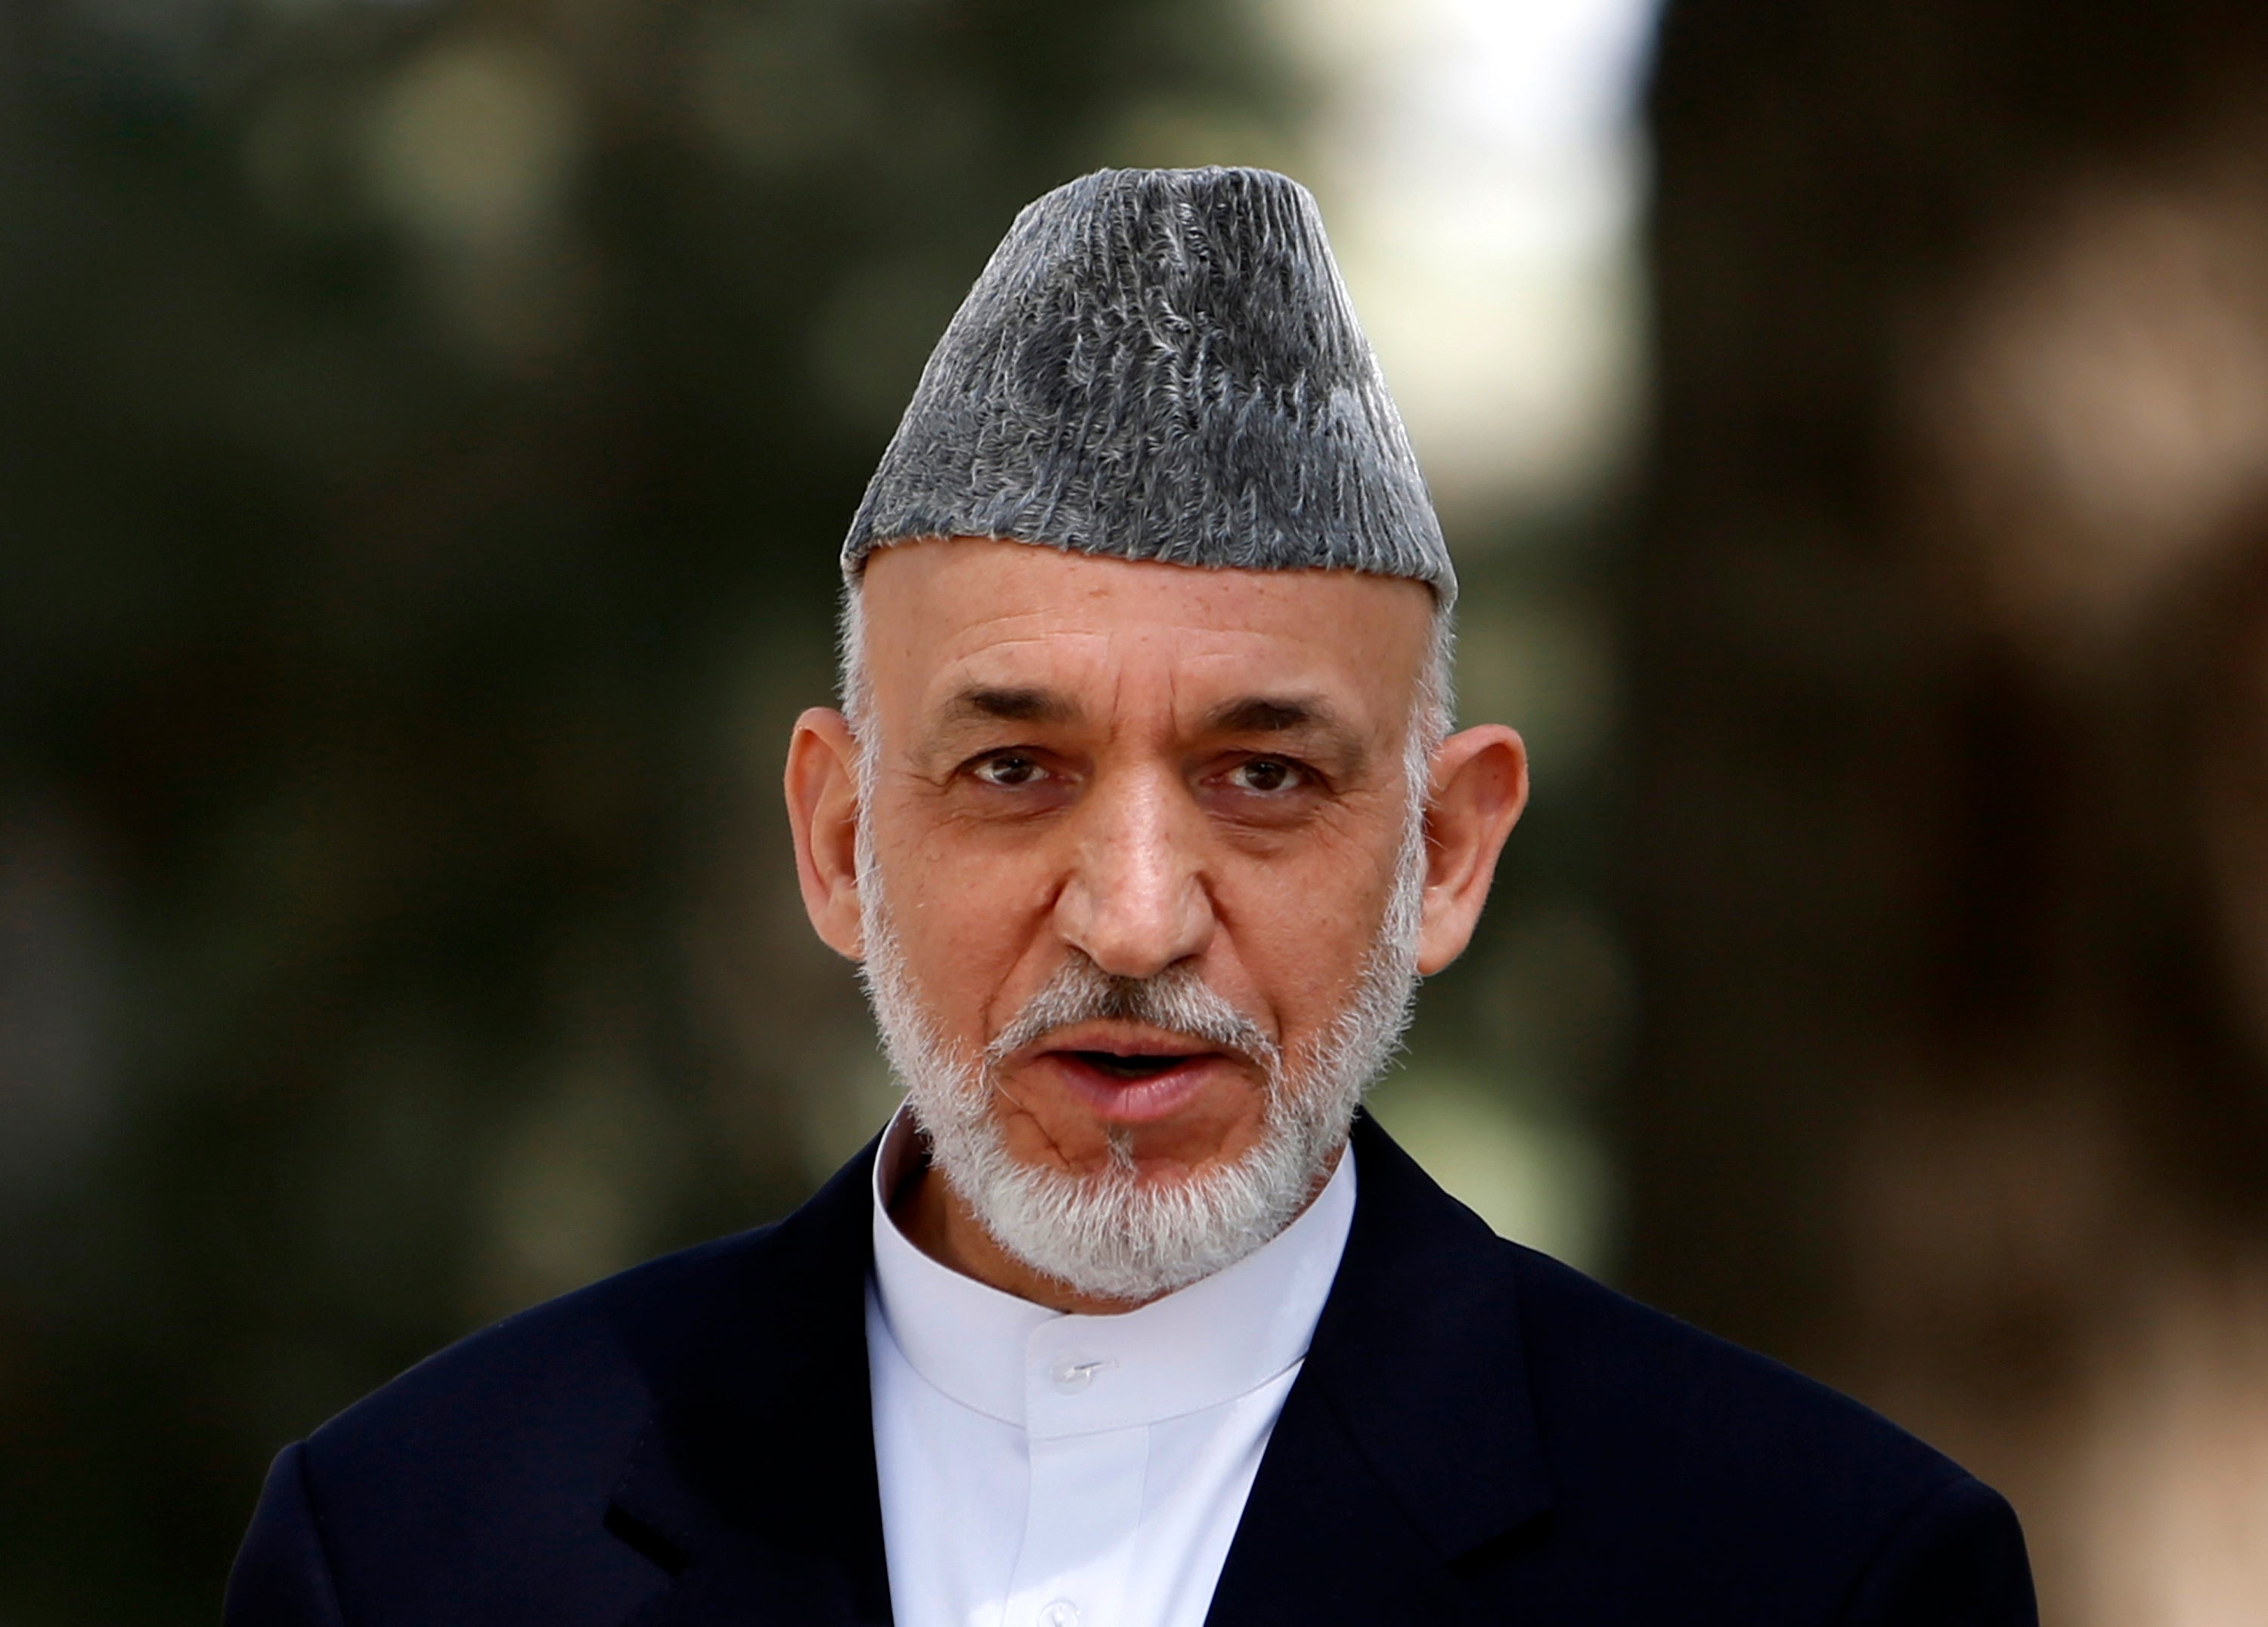 Afghan president, Hamid Karzai, has said that his country will not experience an al-Qa'ida comeback like Iraq